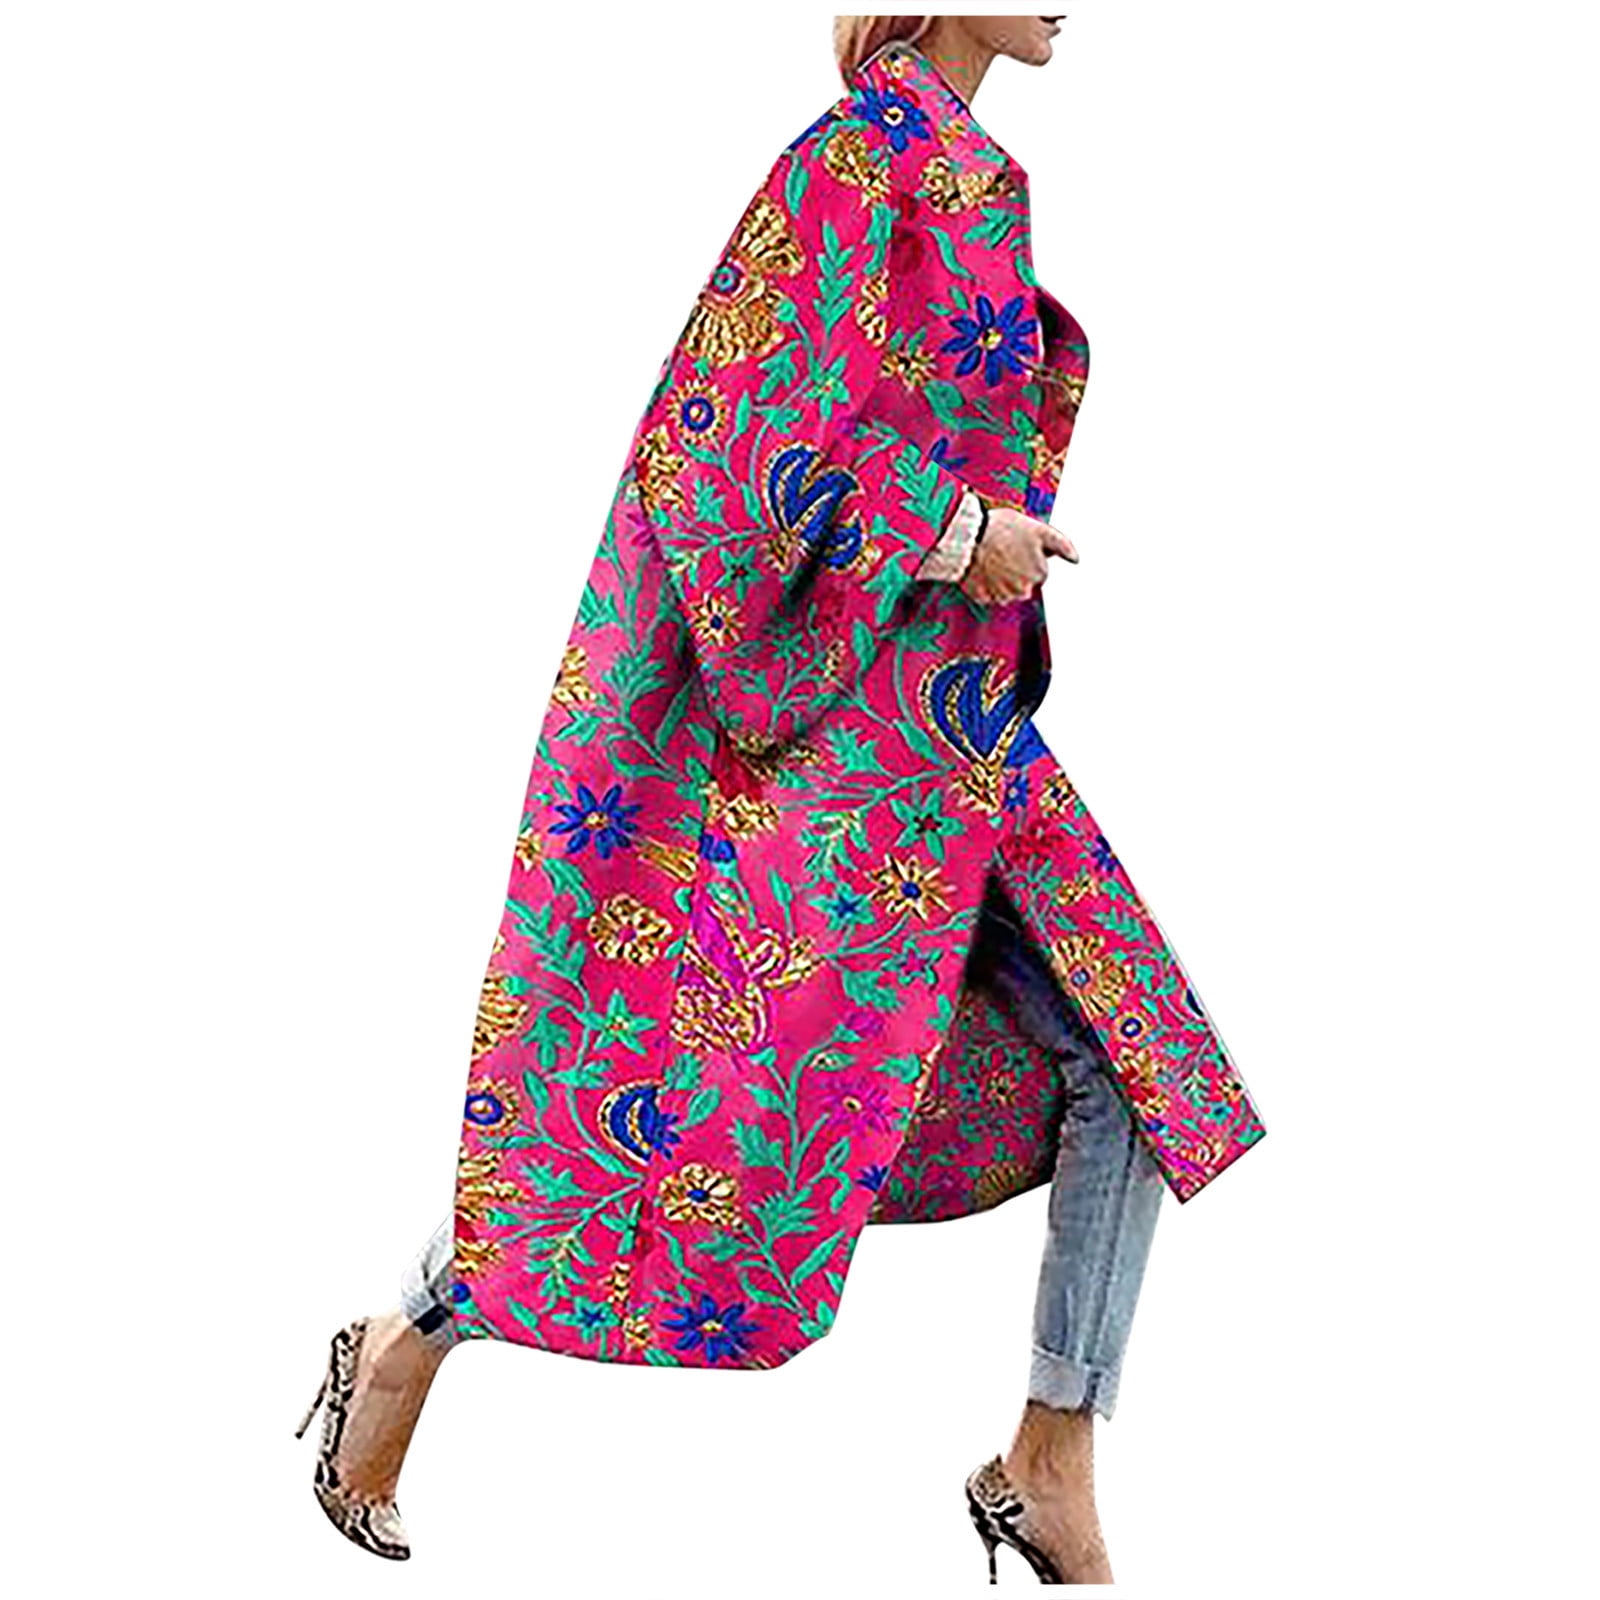 QIPOPIQ Clearance Jackets for Women Fashion Women Printed Pocket Jacket  Outerwear Cardigan Overcoat Long Trench Coat 